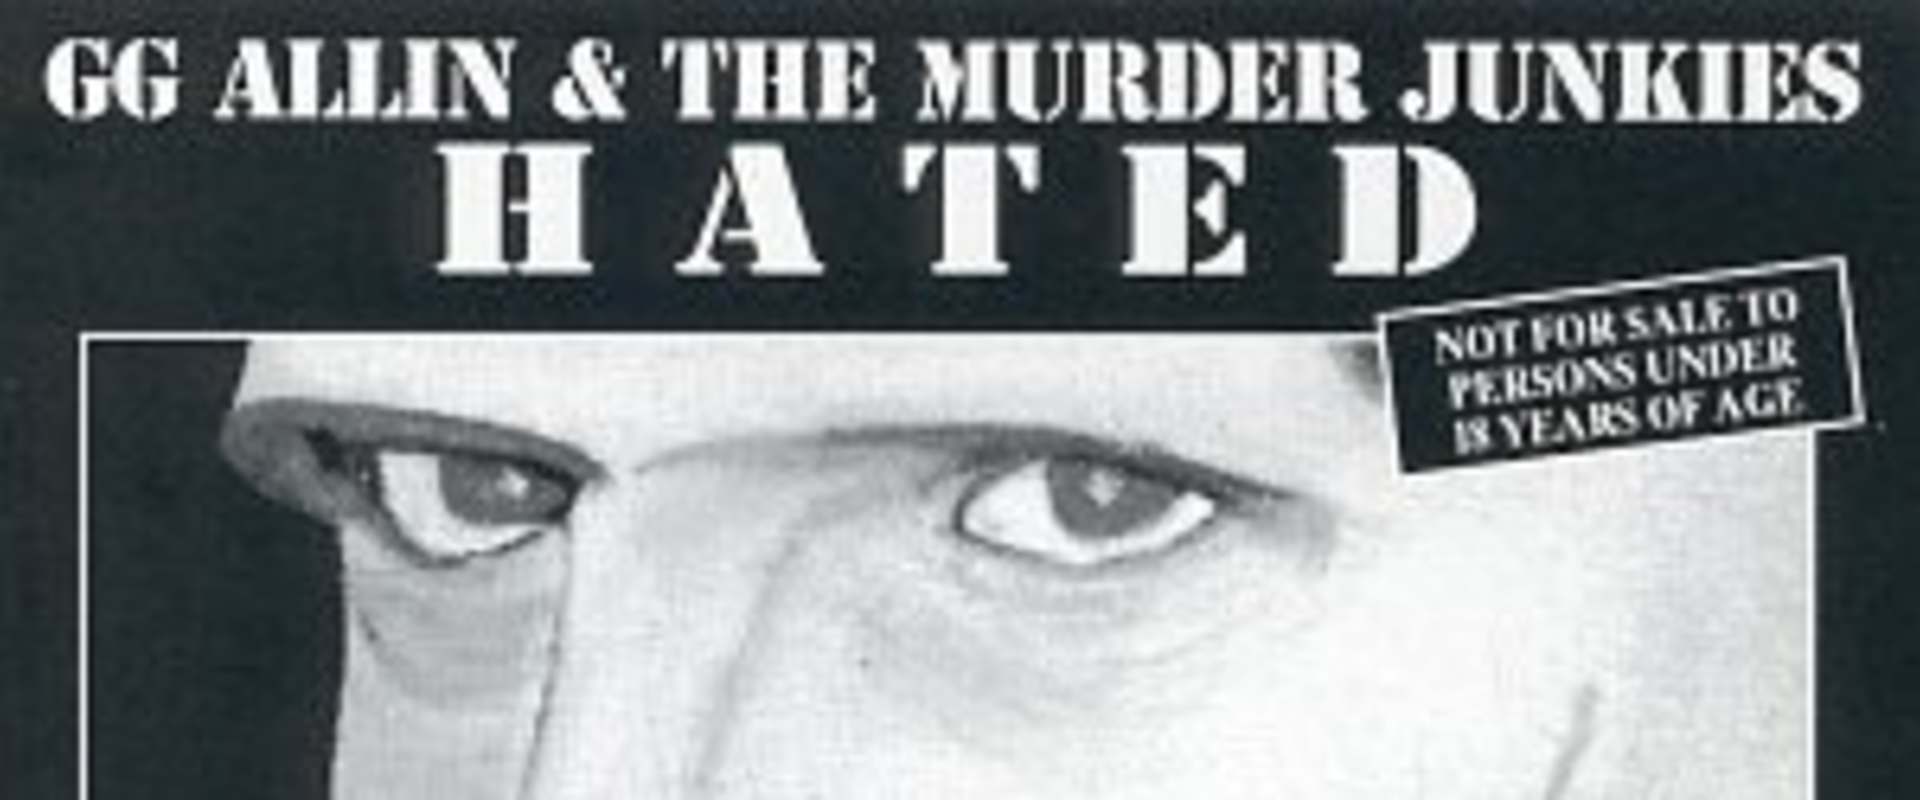 Hated: GG Allin & the Murder Junkies background 1